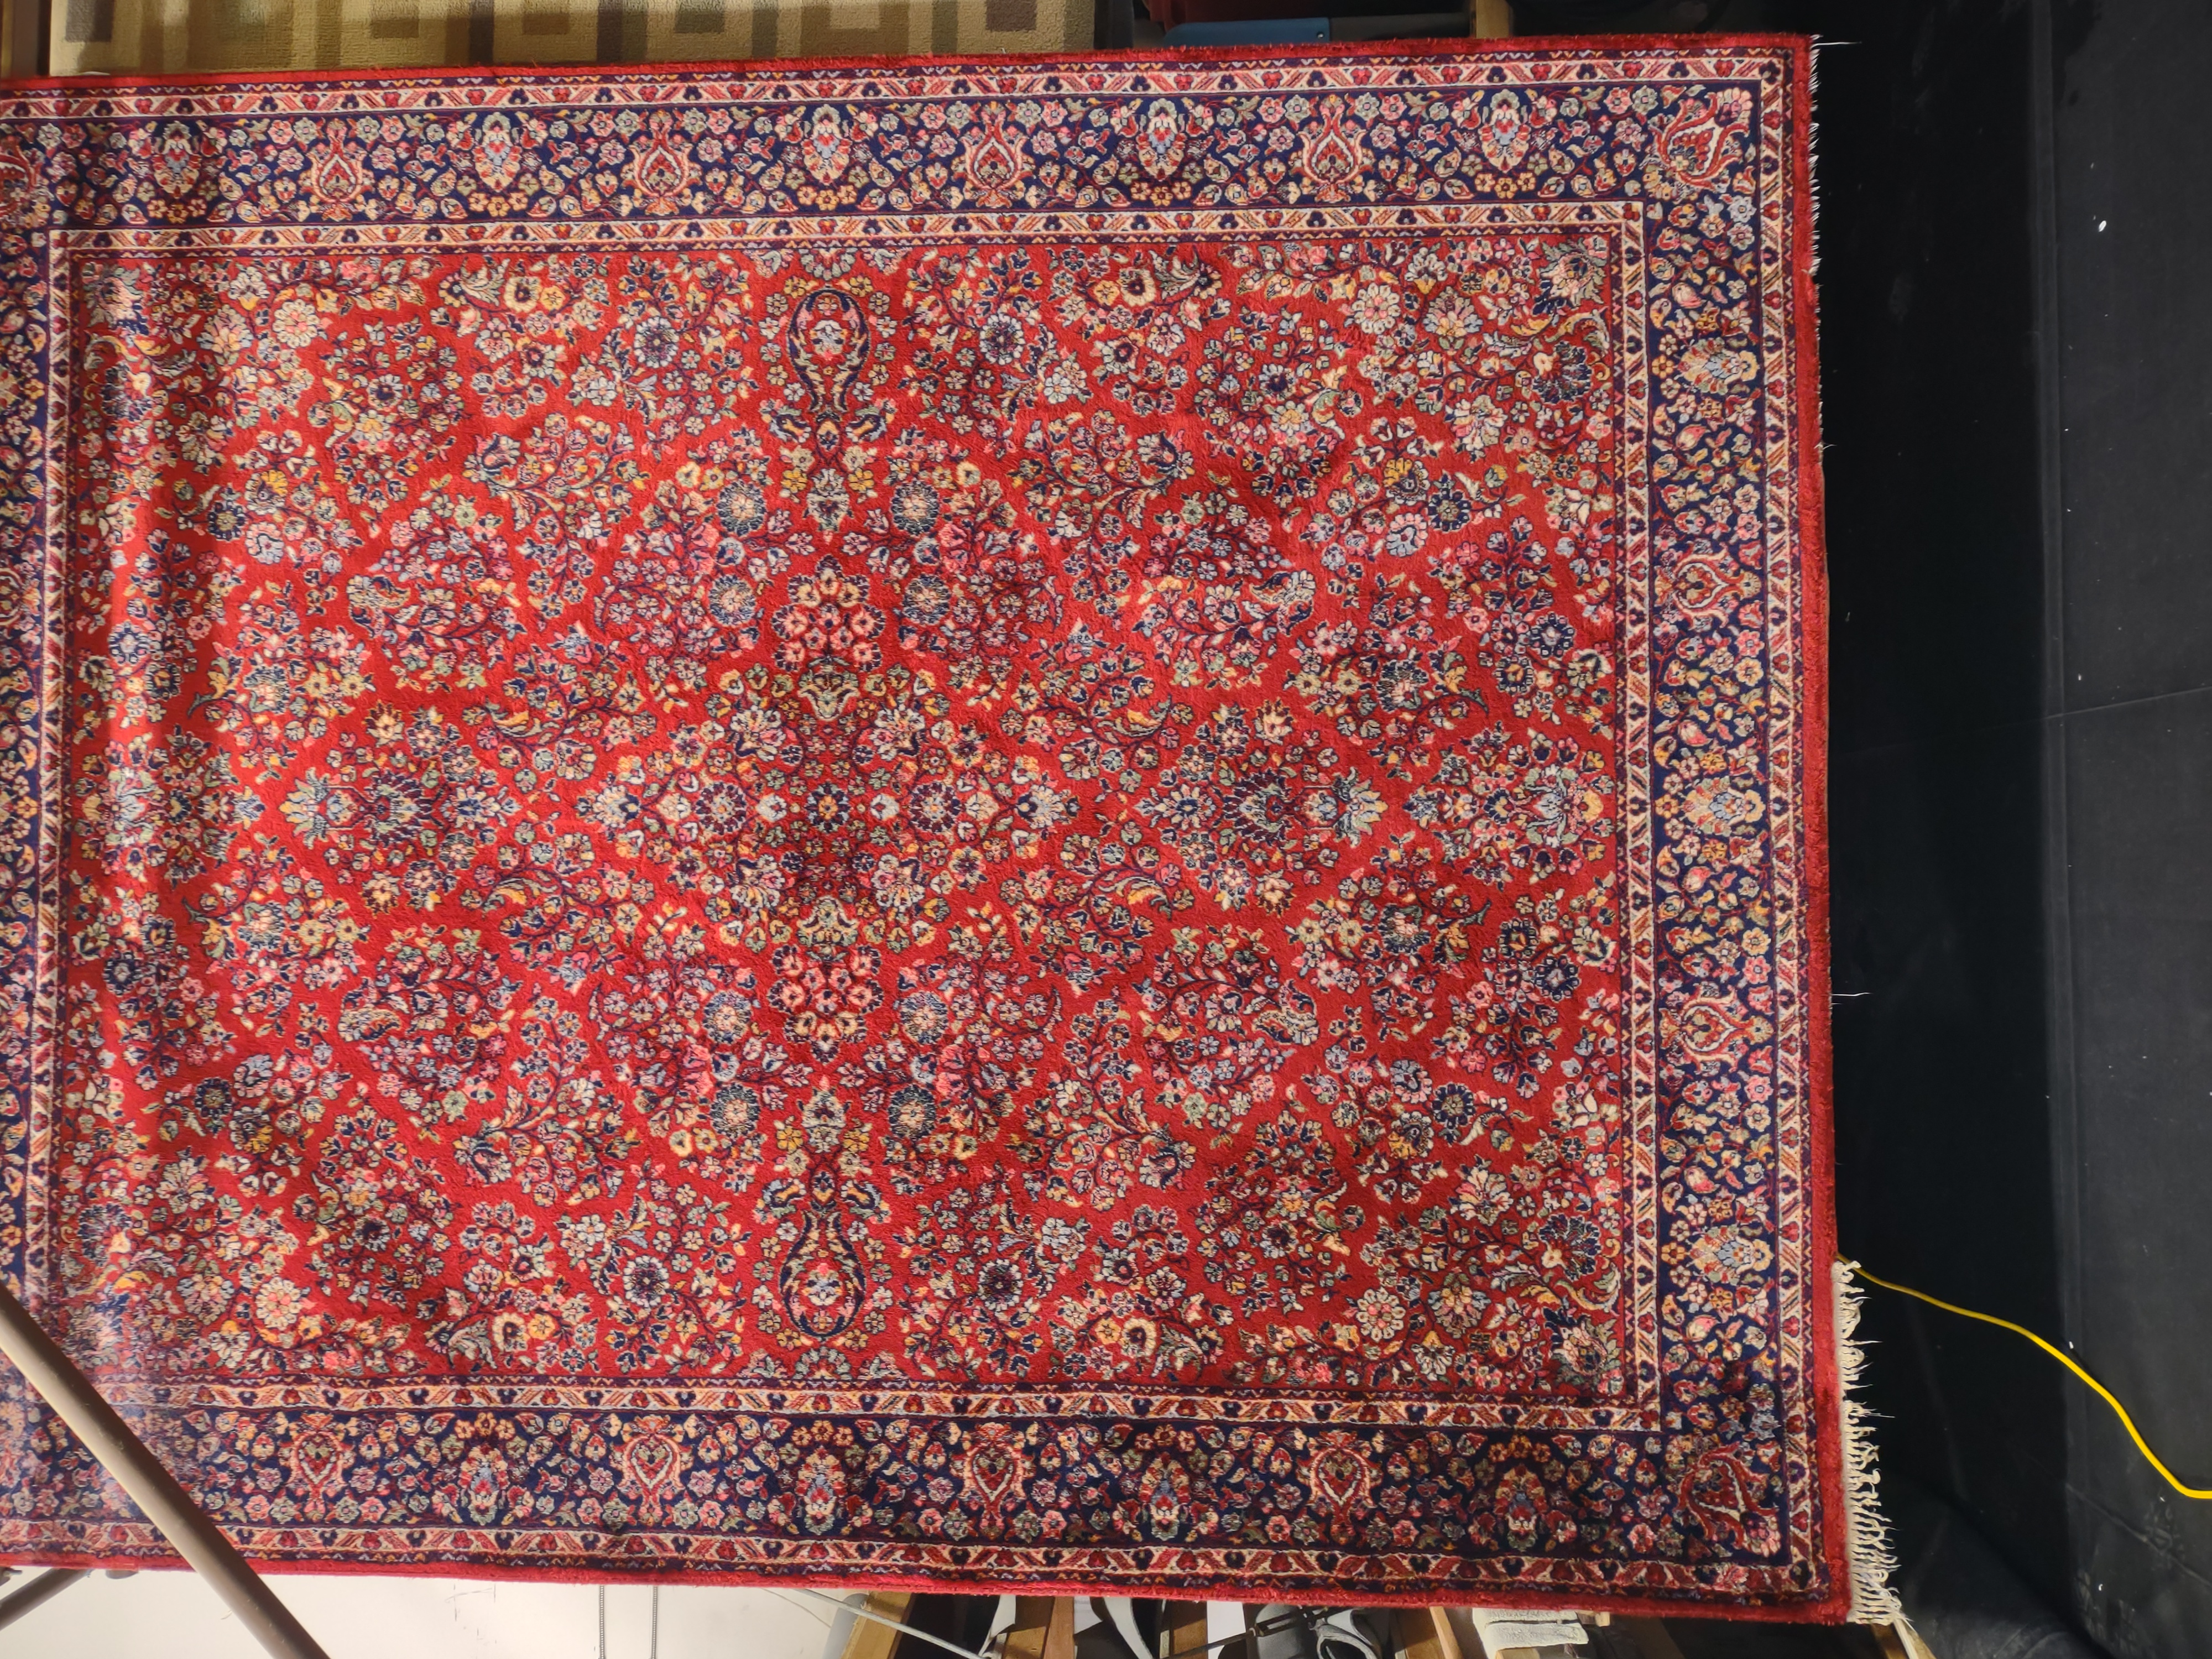 Machine woven wool rug with Sarouk design